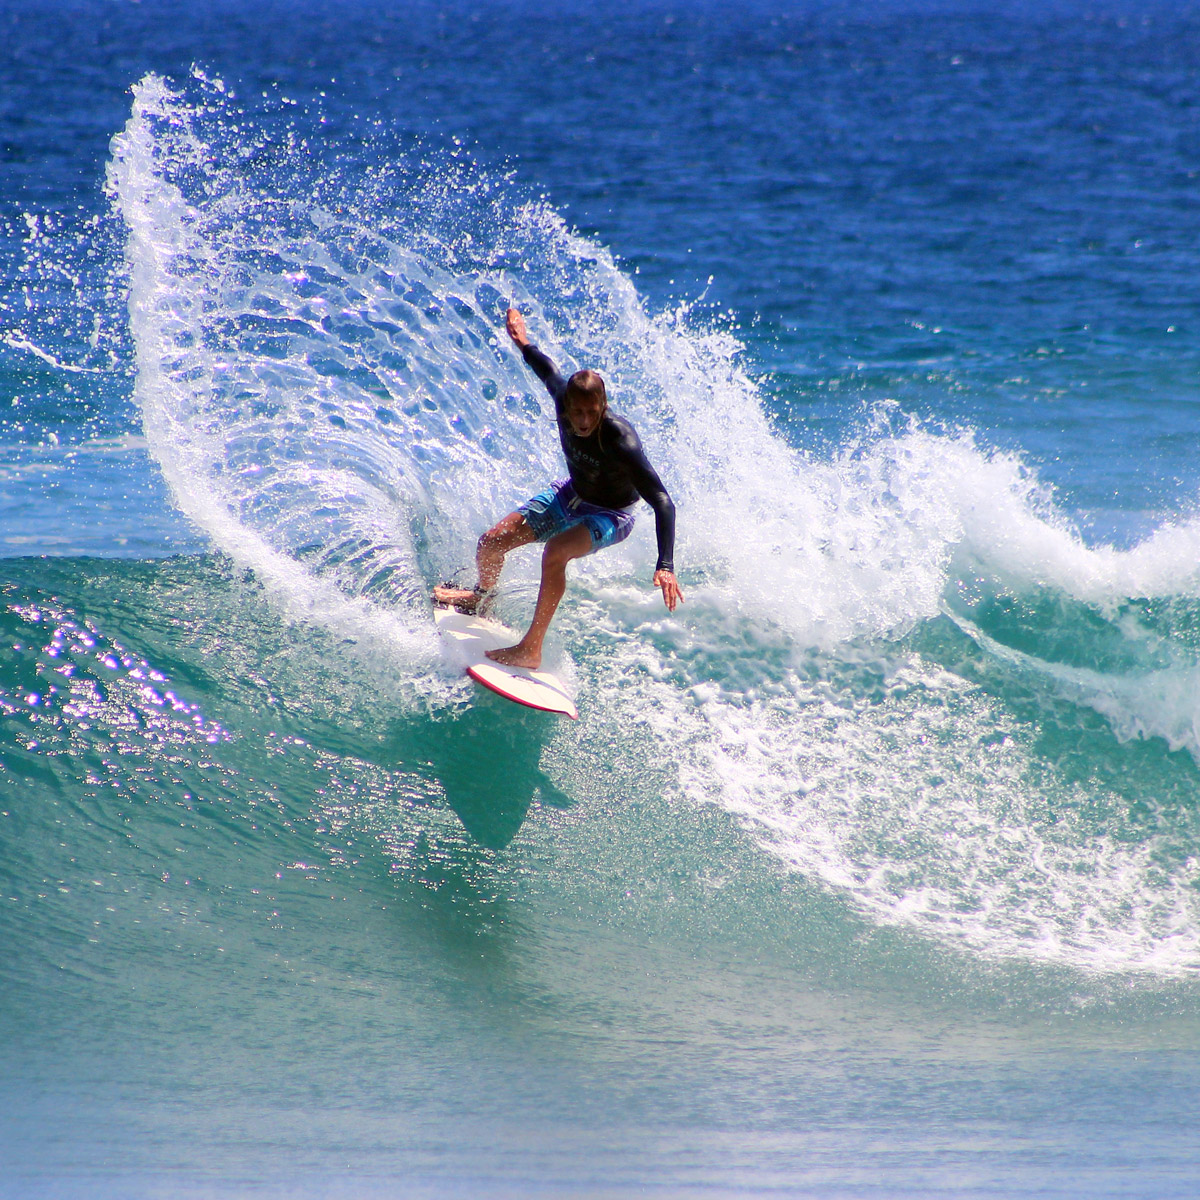 Surfer riding a big wave.